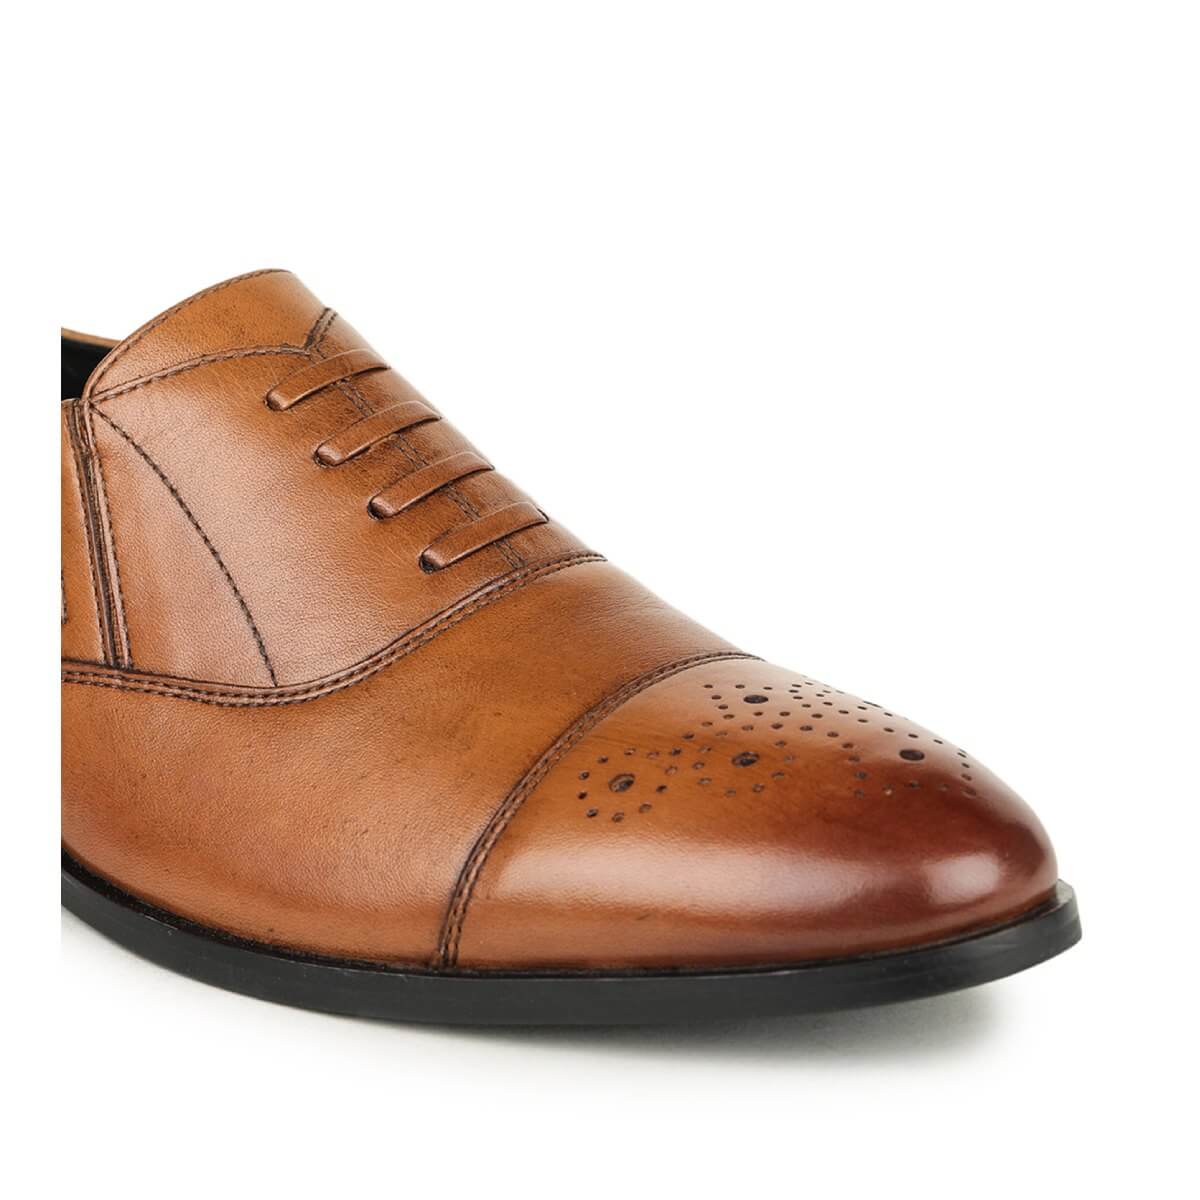  brogue shoes formal tan7